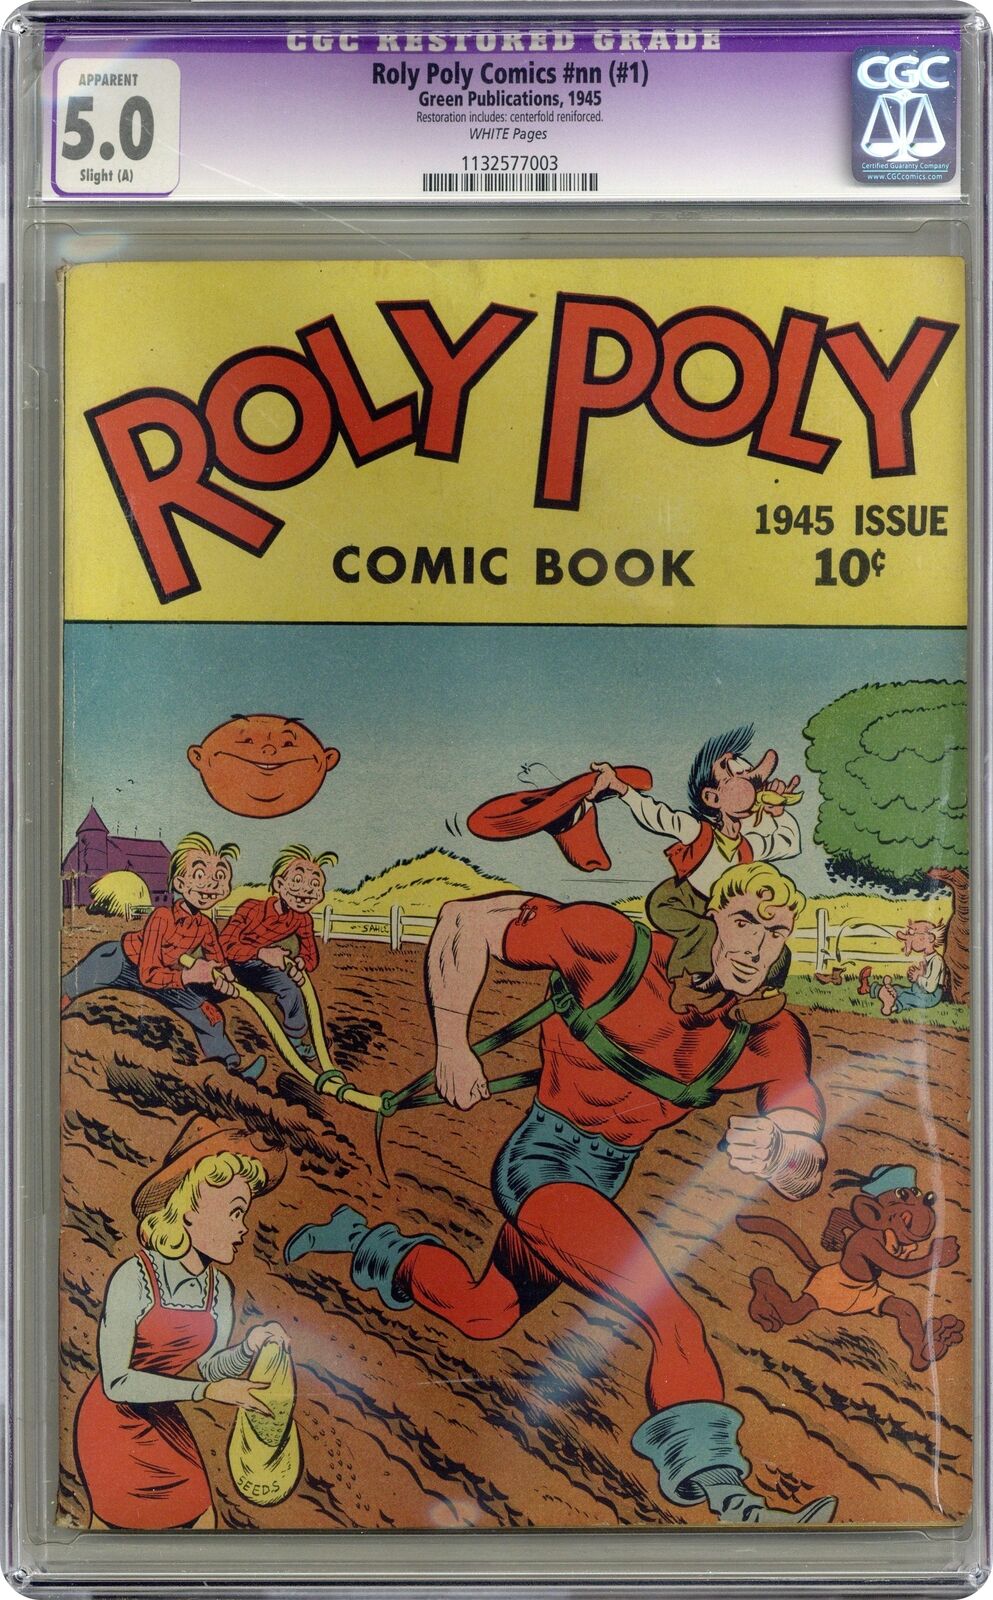 Roly Poly Comics #1 CGC 5.0 RESTORED 1945 1132577003